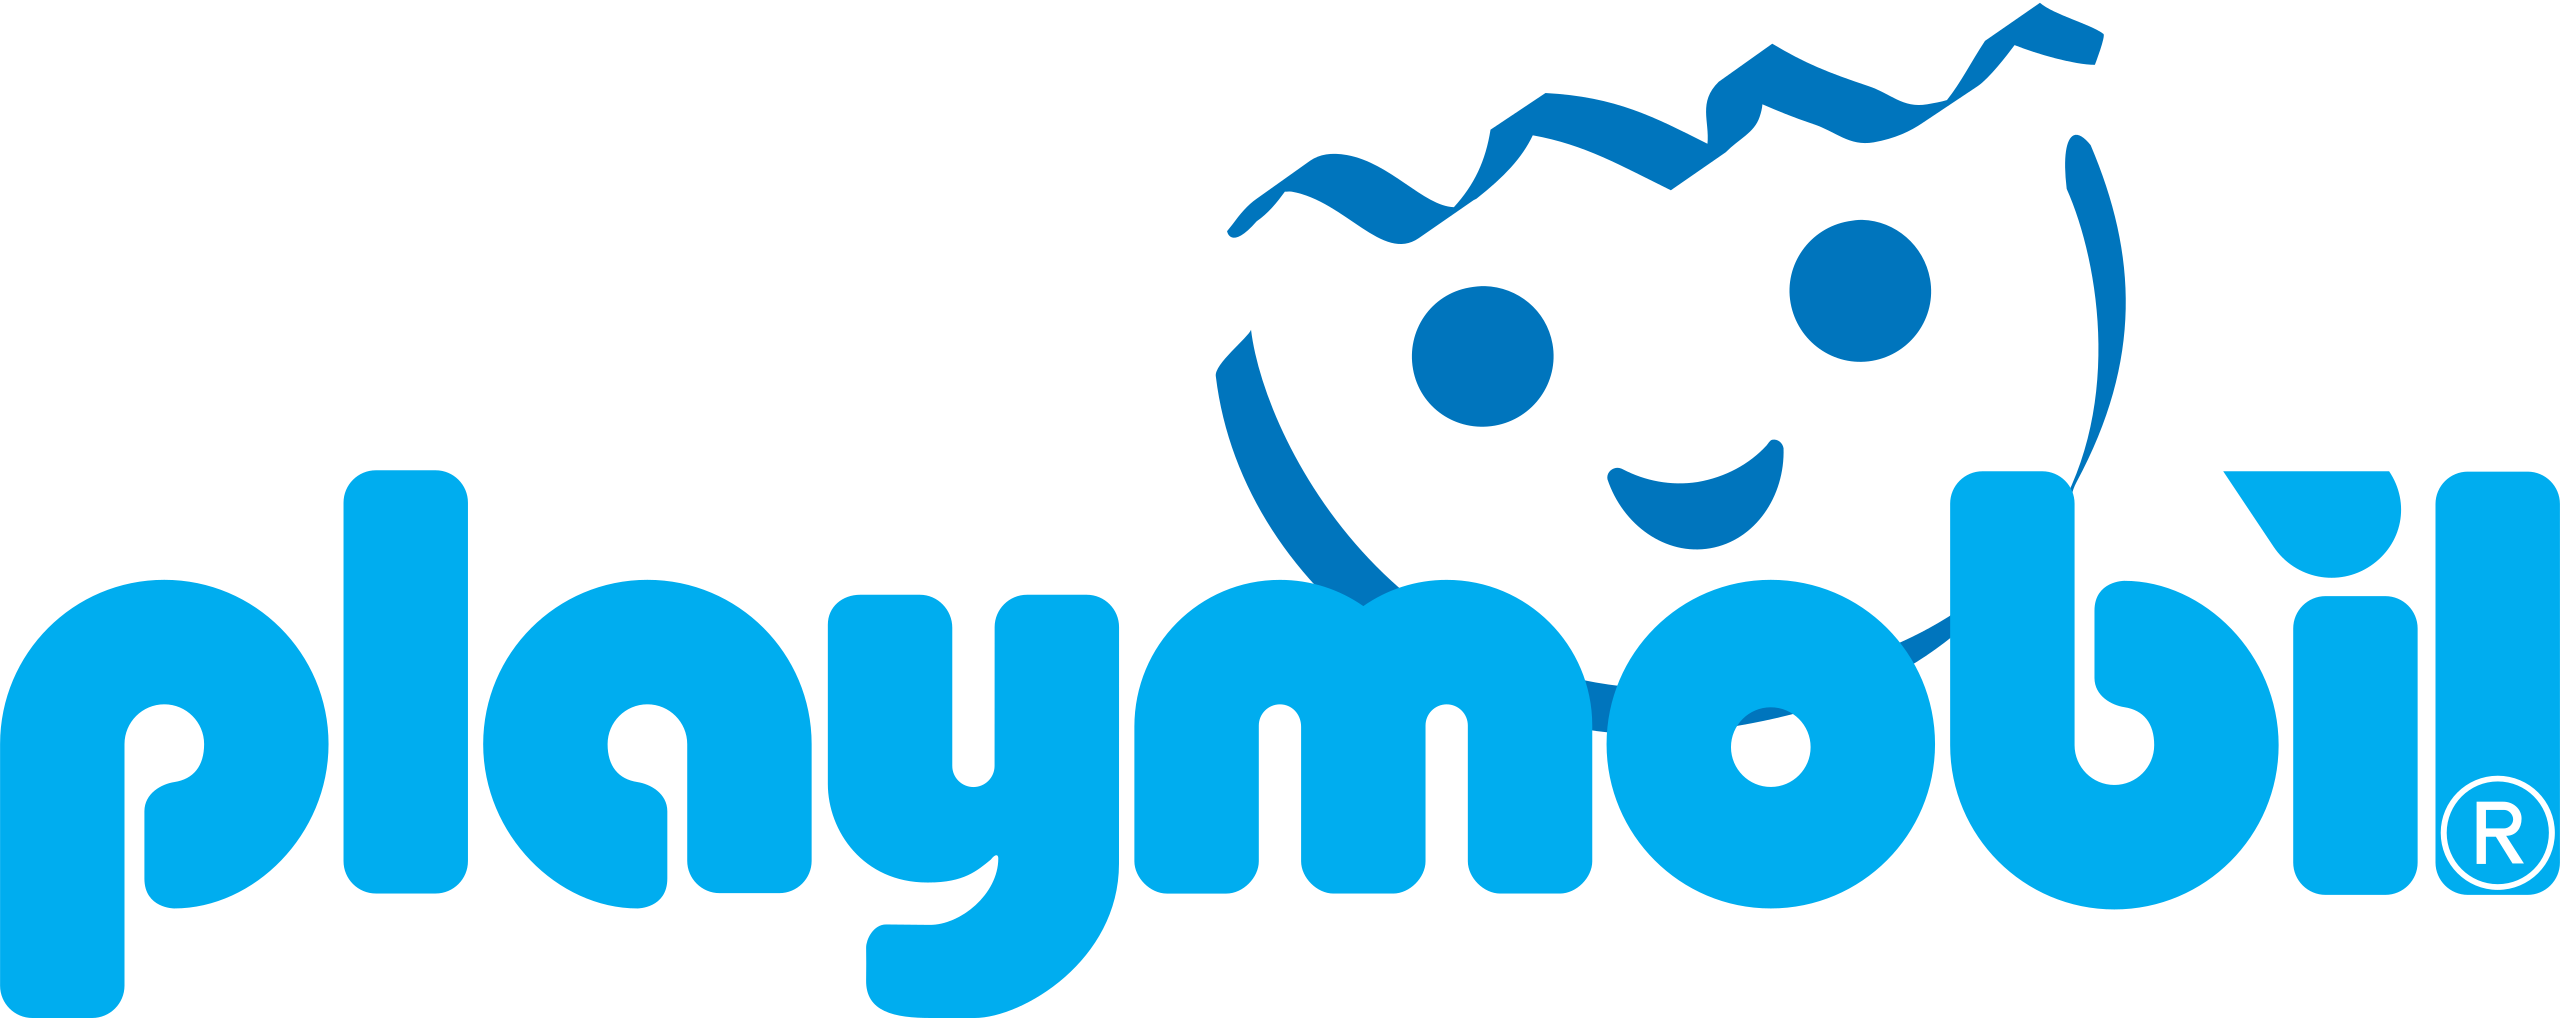 Playmobil_logo.png